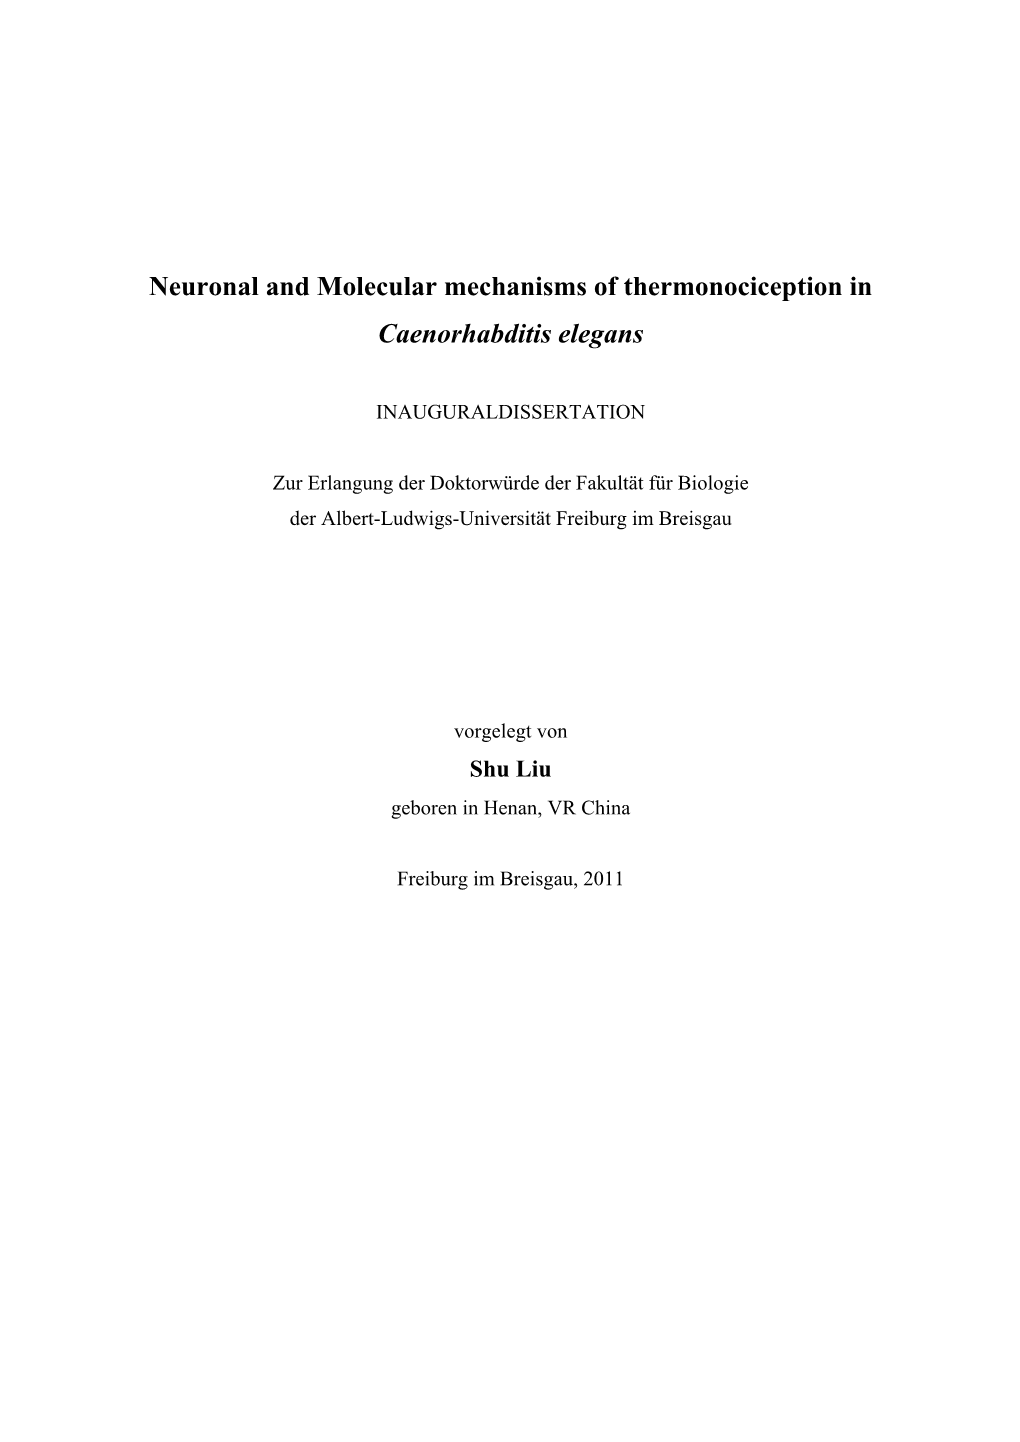 Neuronal and Molecular Mechanisms of Thermonociception in Caenorhabditis Elegans